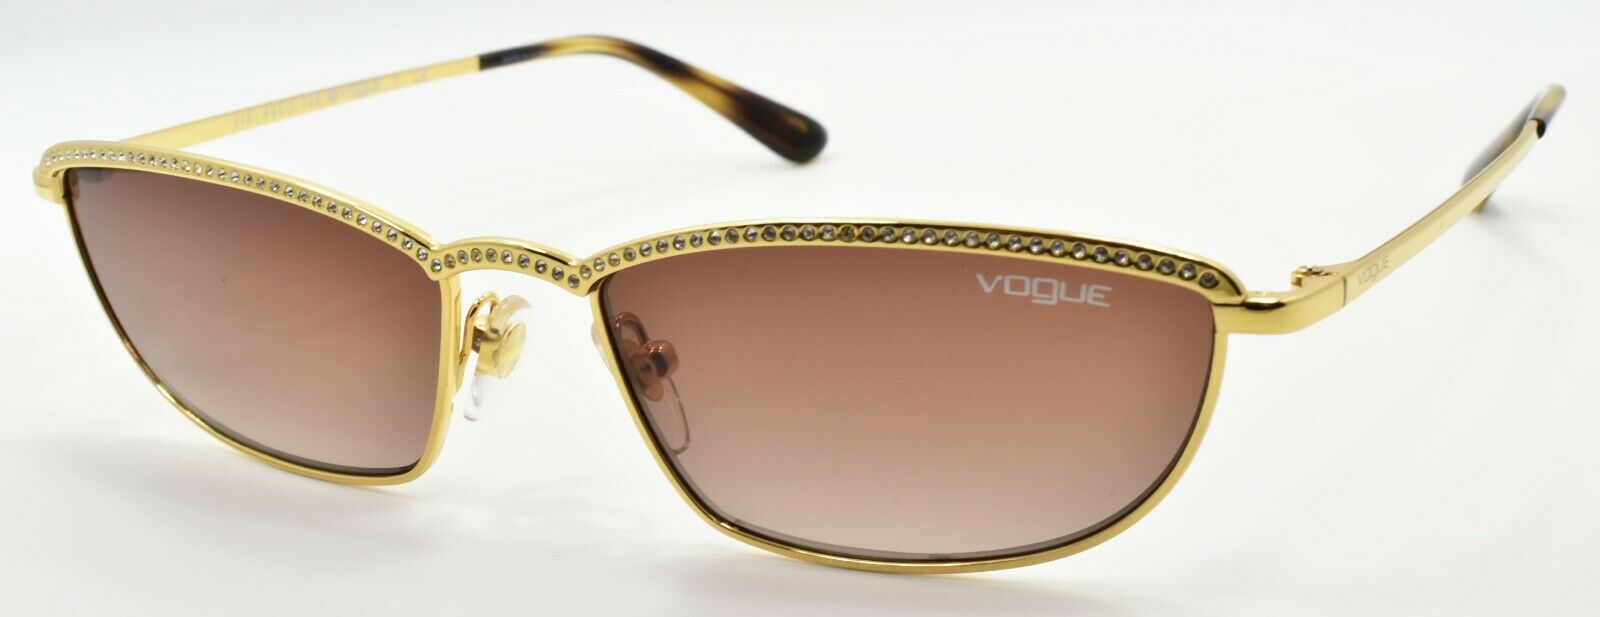 1-Vogue x Gigi Hadid VO4139SB 280/13 Women's Sunglasses Gold / Brown Gradient-8056597048644-IKSpecs